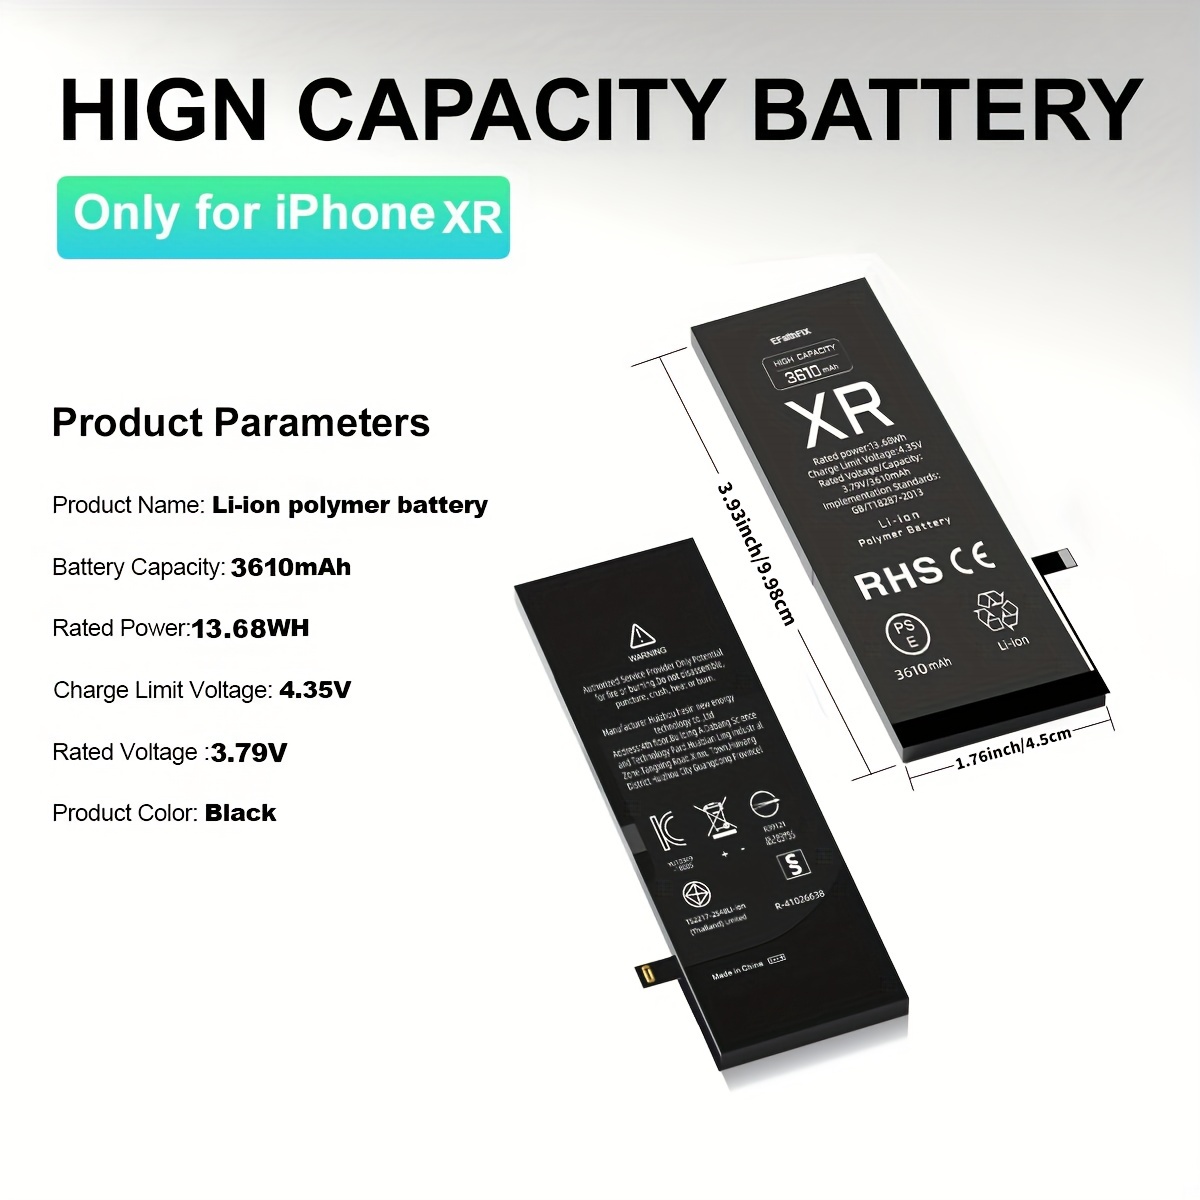 Sticker batterie iPhone XS Max